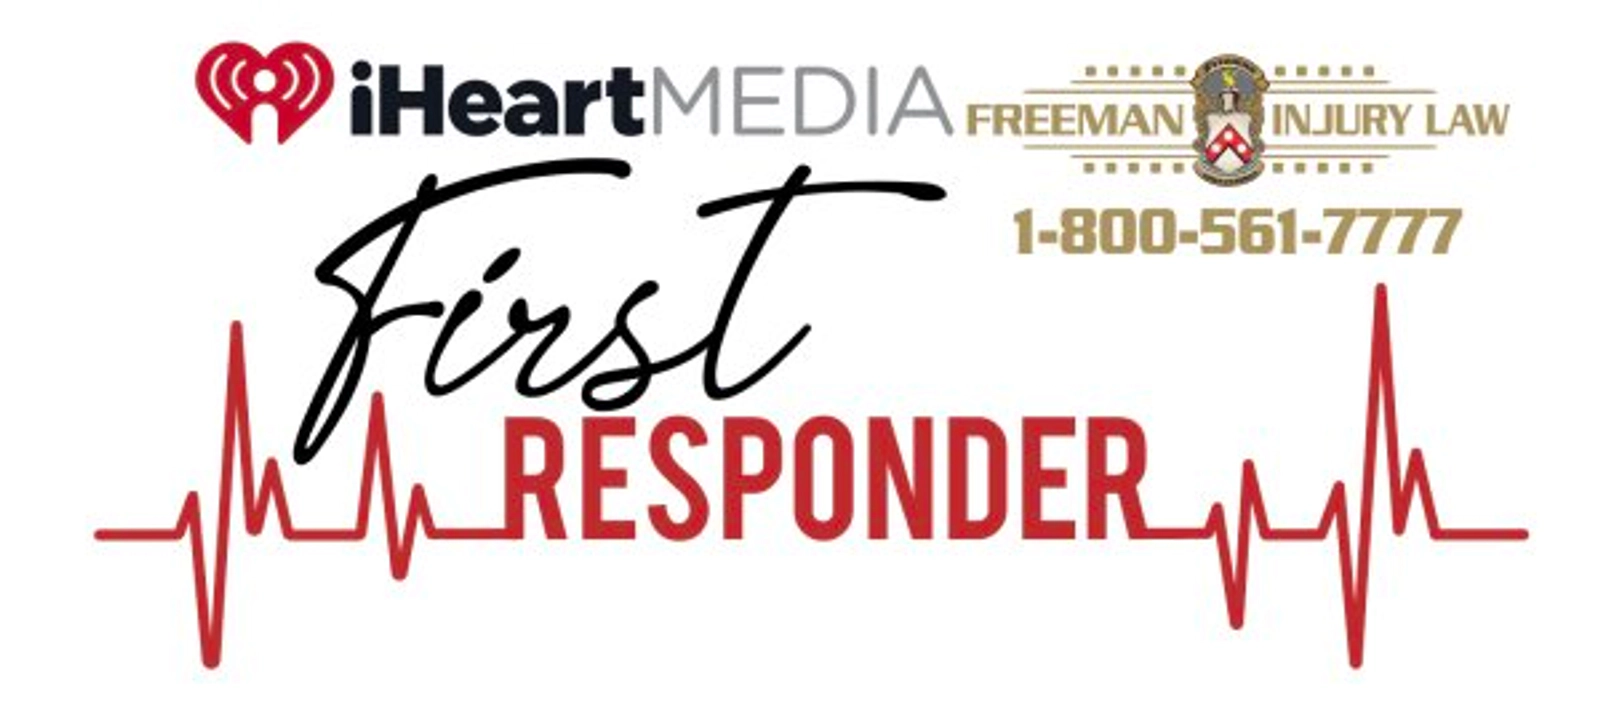 iHeartMedia & Freeman Injury Law First Responder Salute - Thumbnail Image